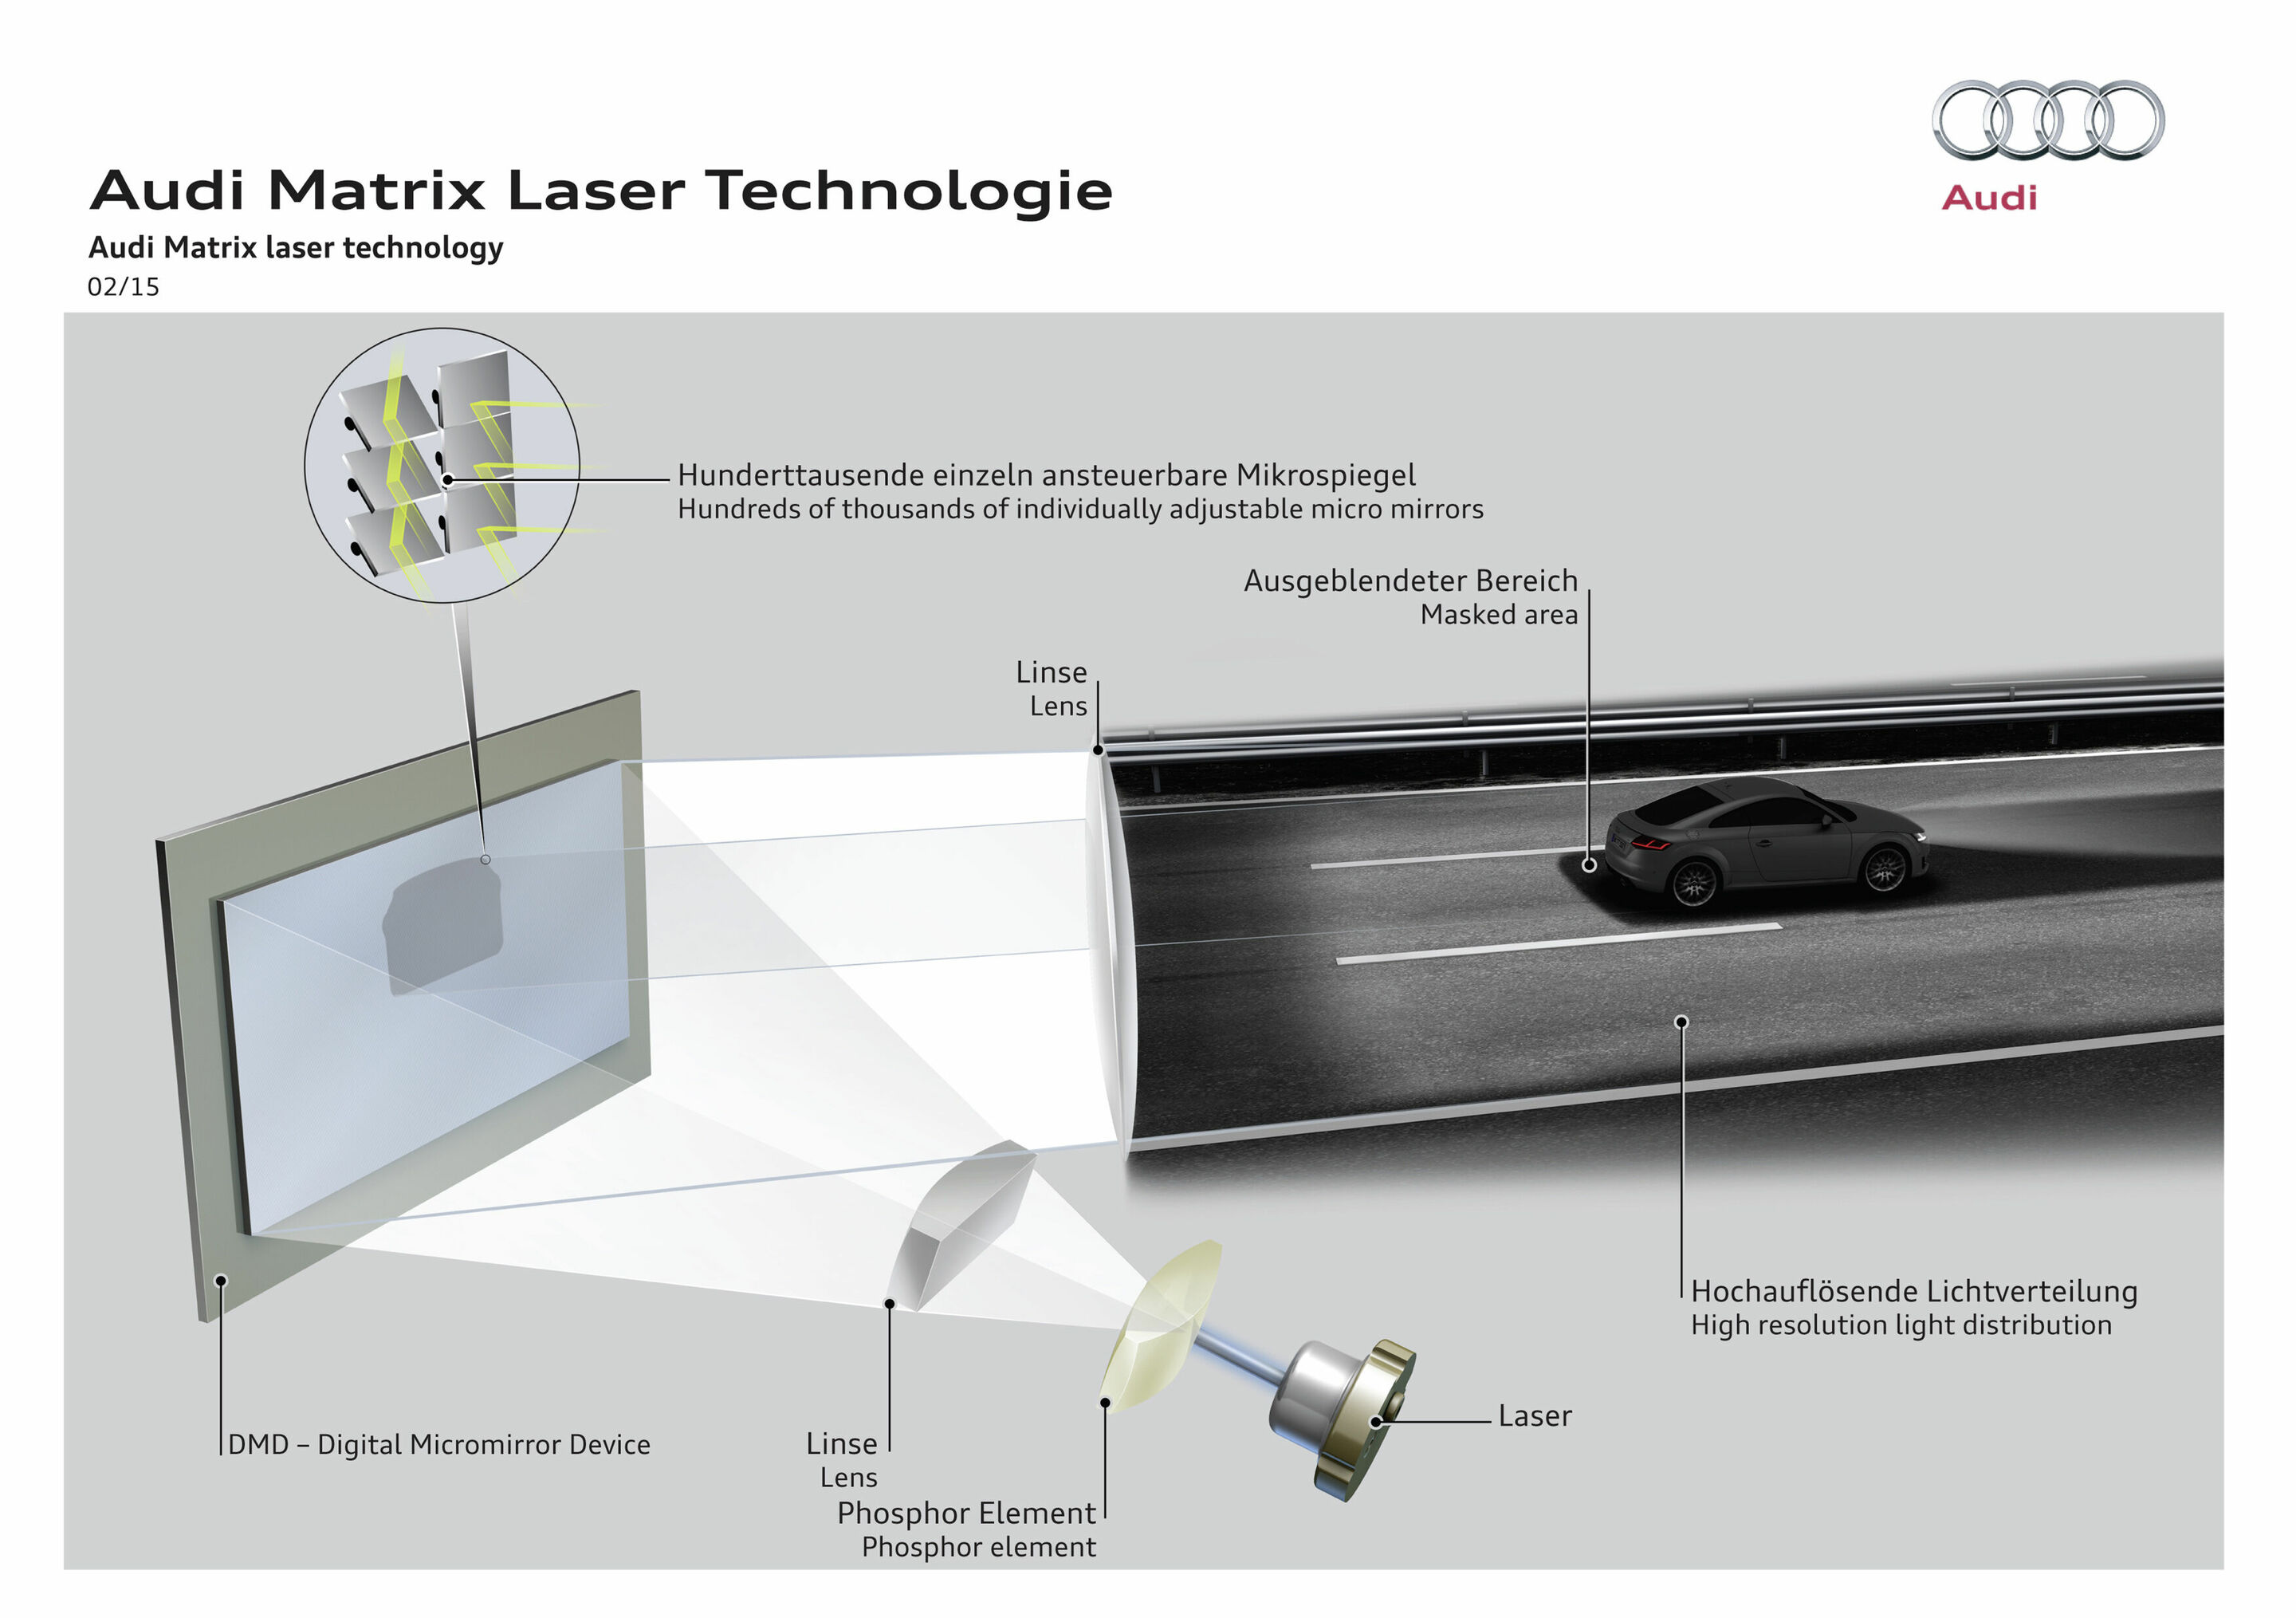 Audi Matrix laser technology